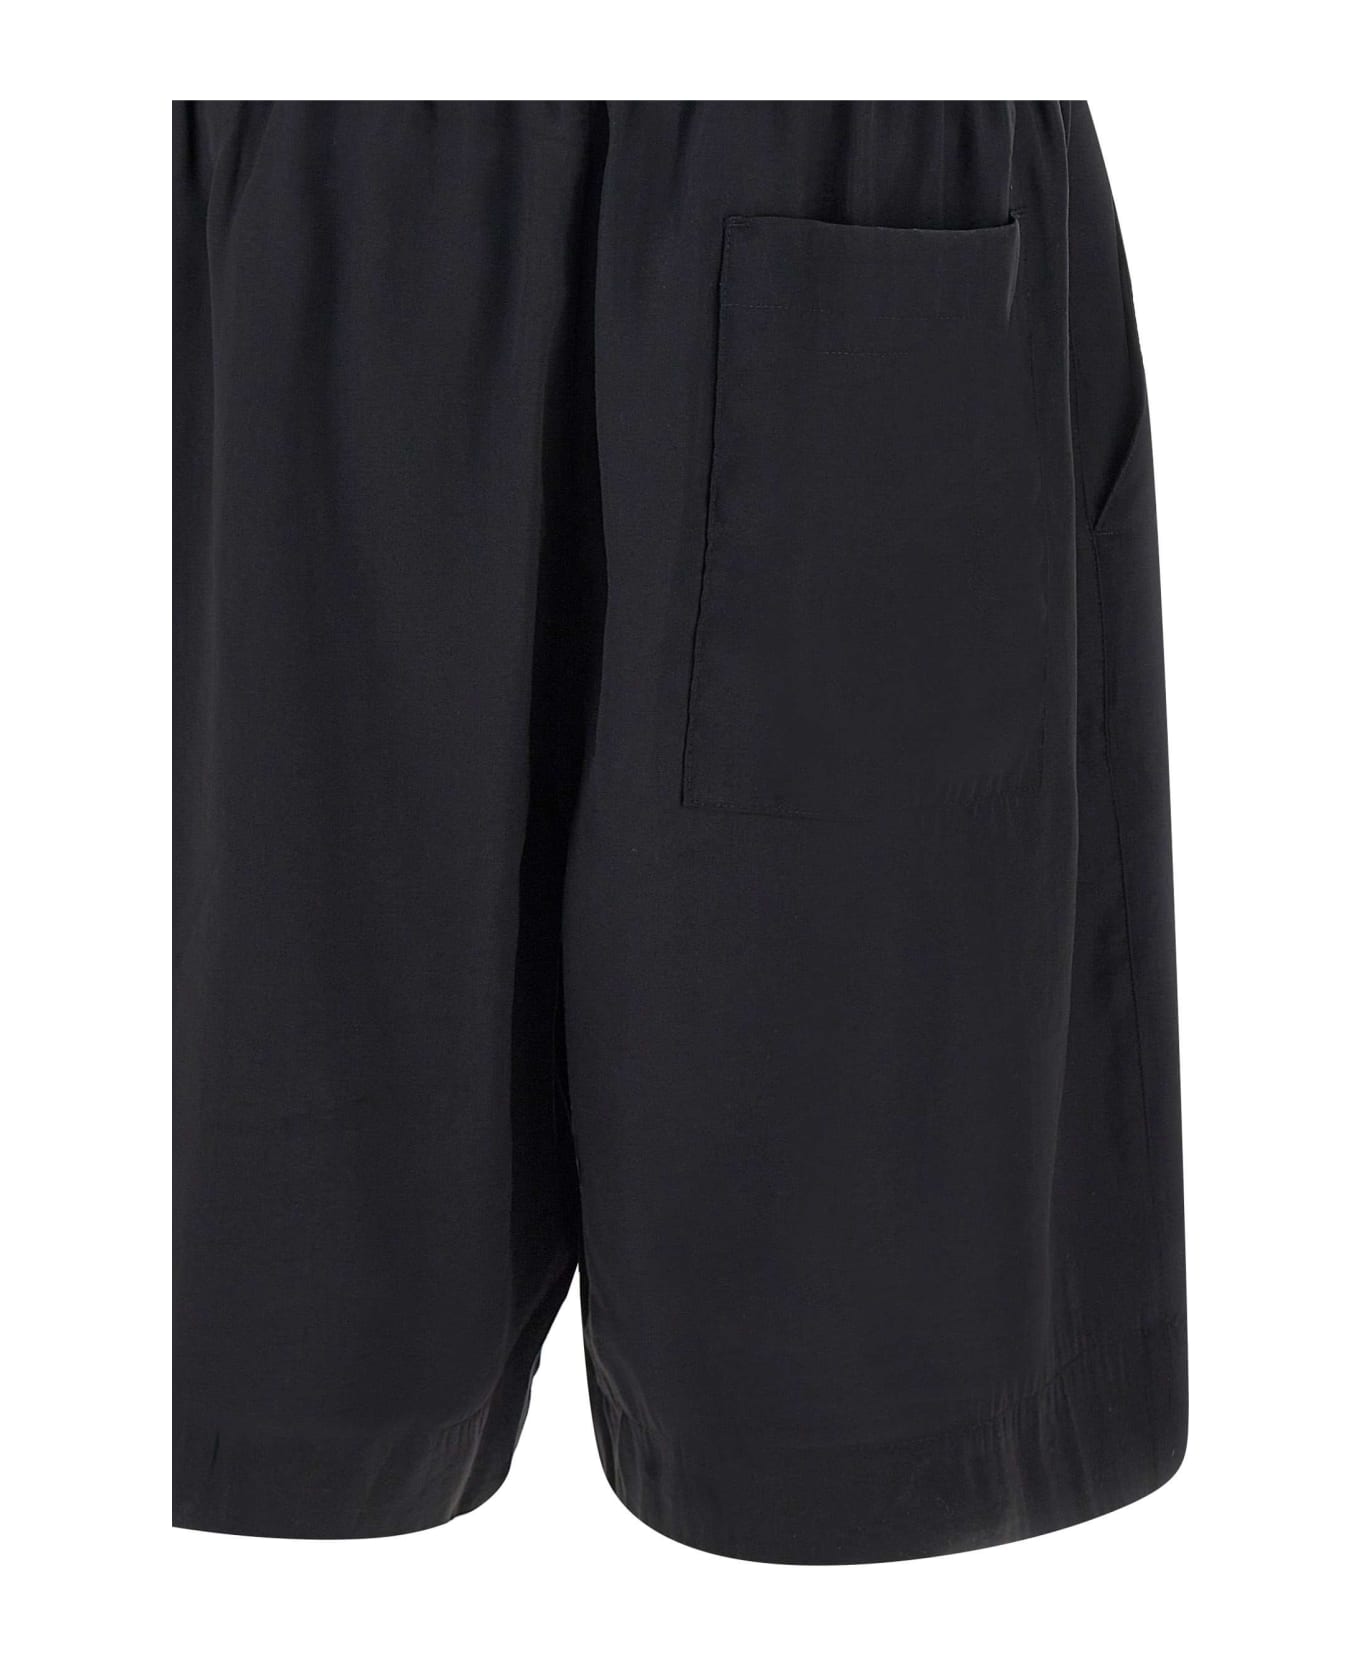 Emporio Armani Modal Shorts - BLACK